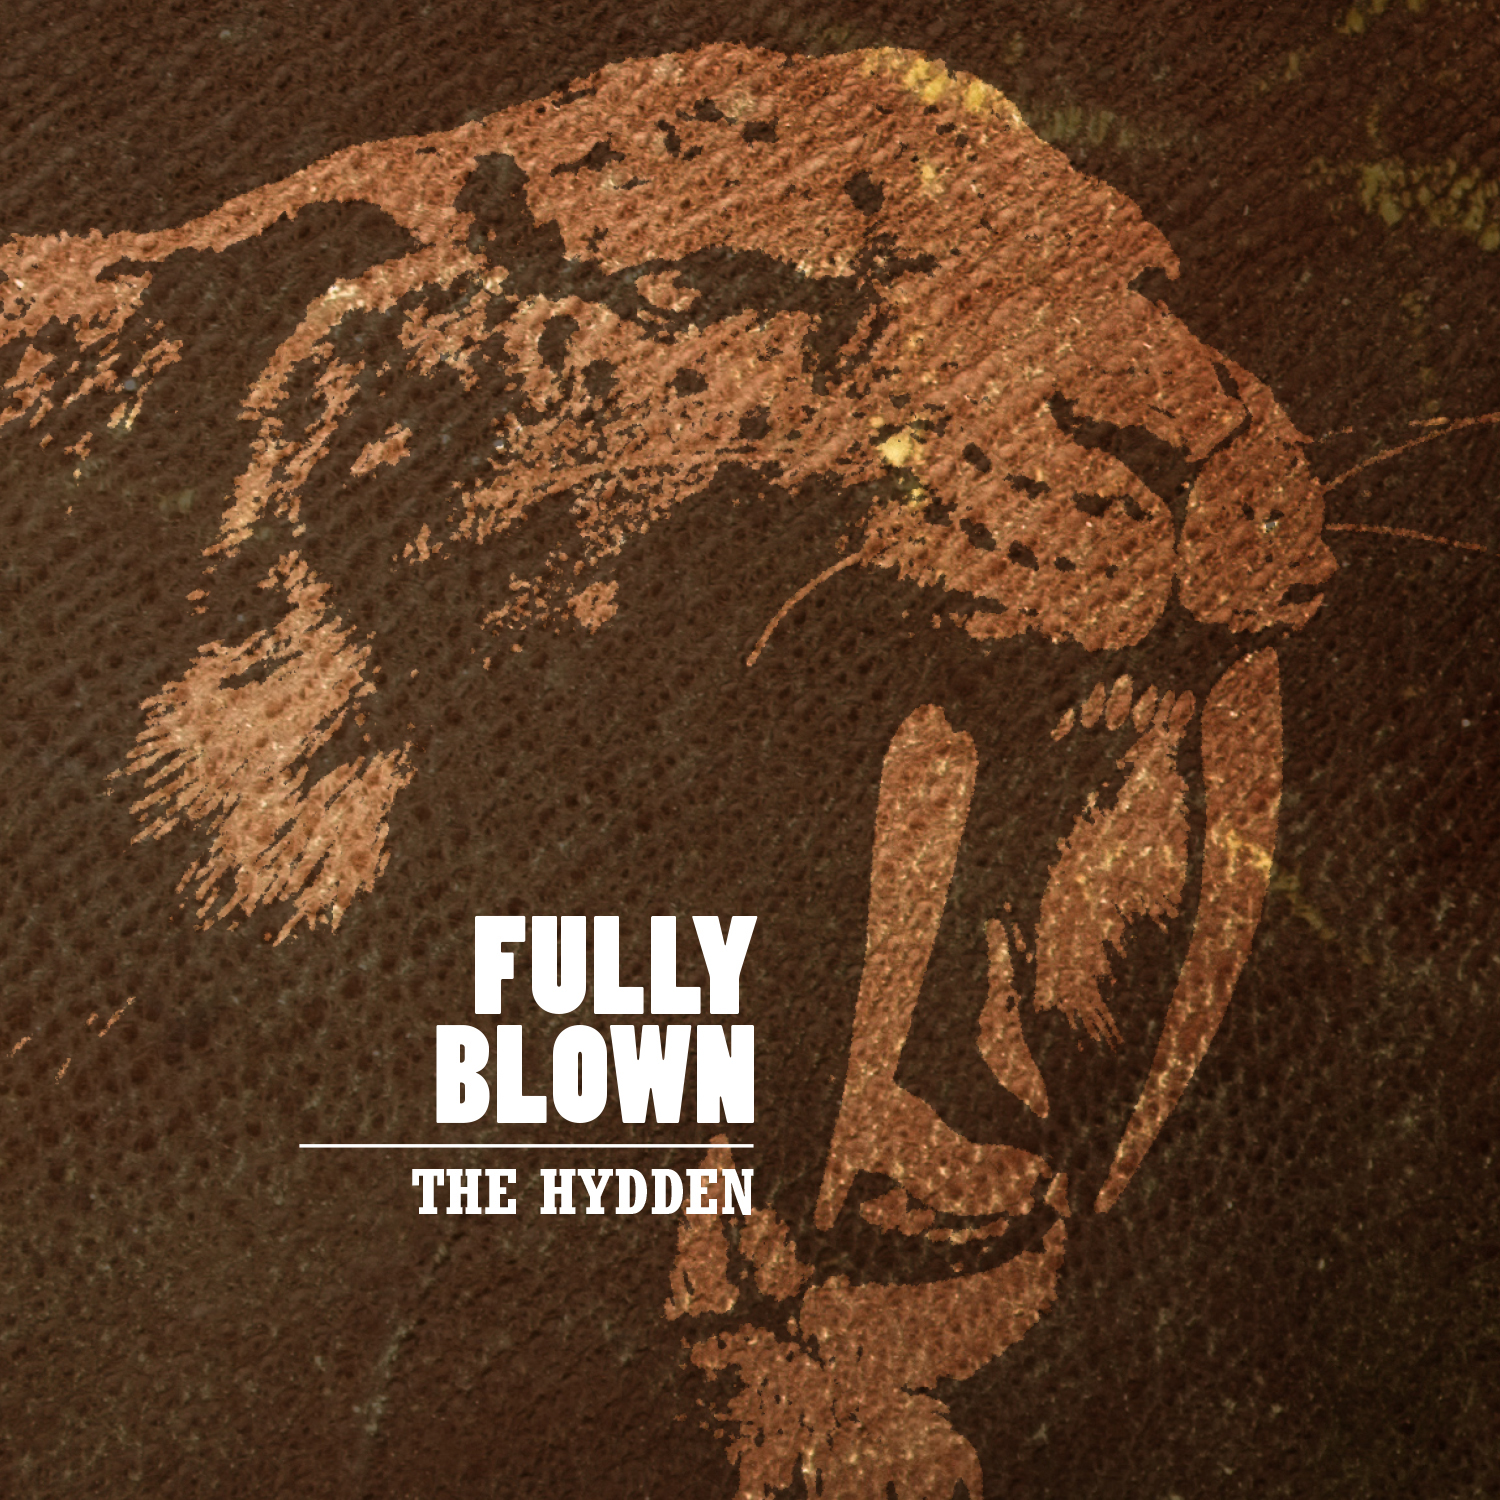 THE HYDDEN – FULLY BLOWN (Single)